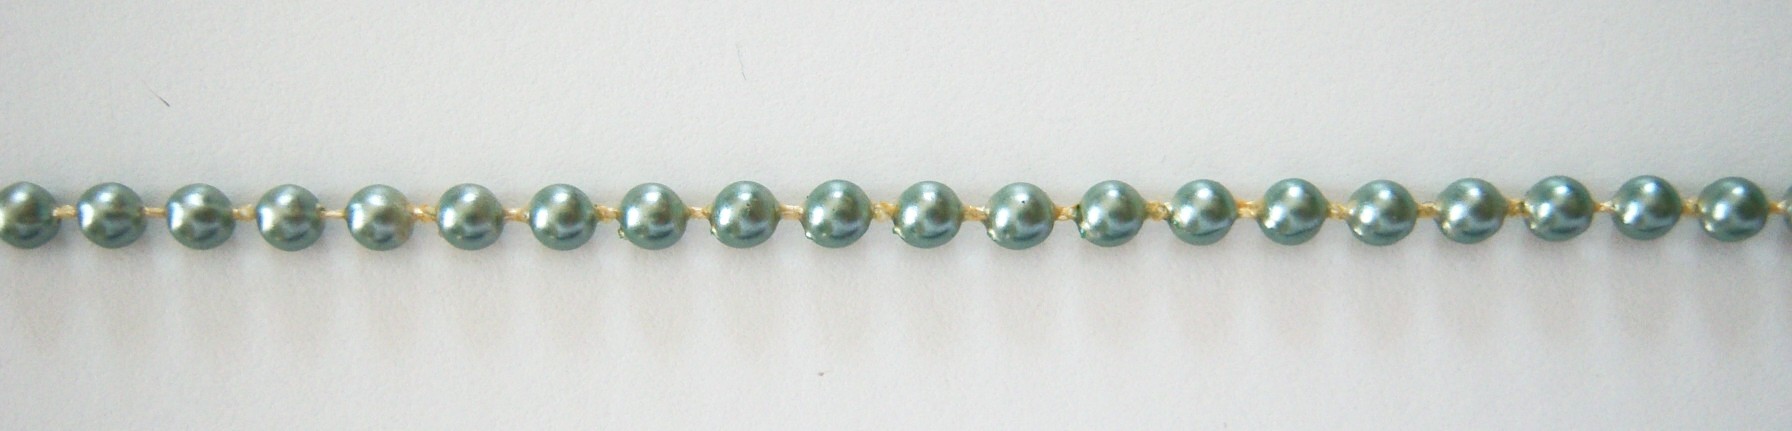 Antique Green 4mm Imitation Pearls